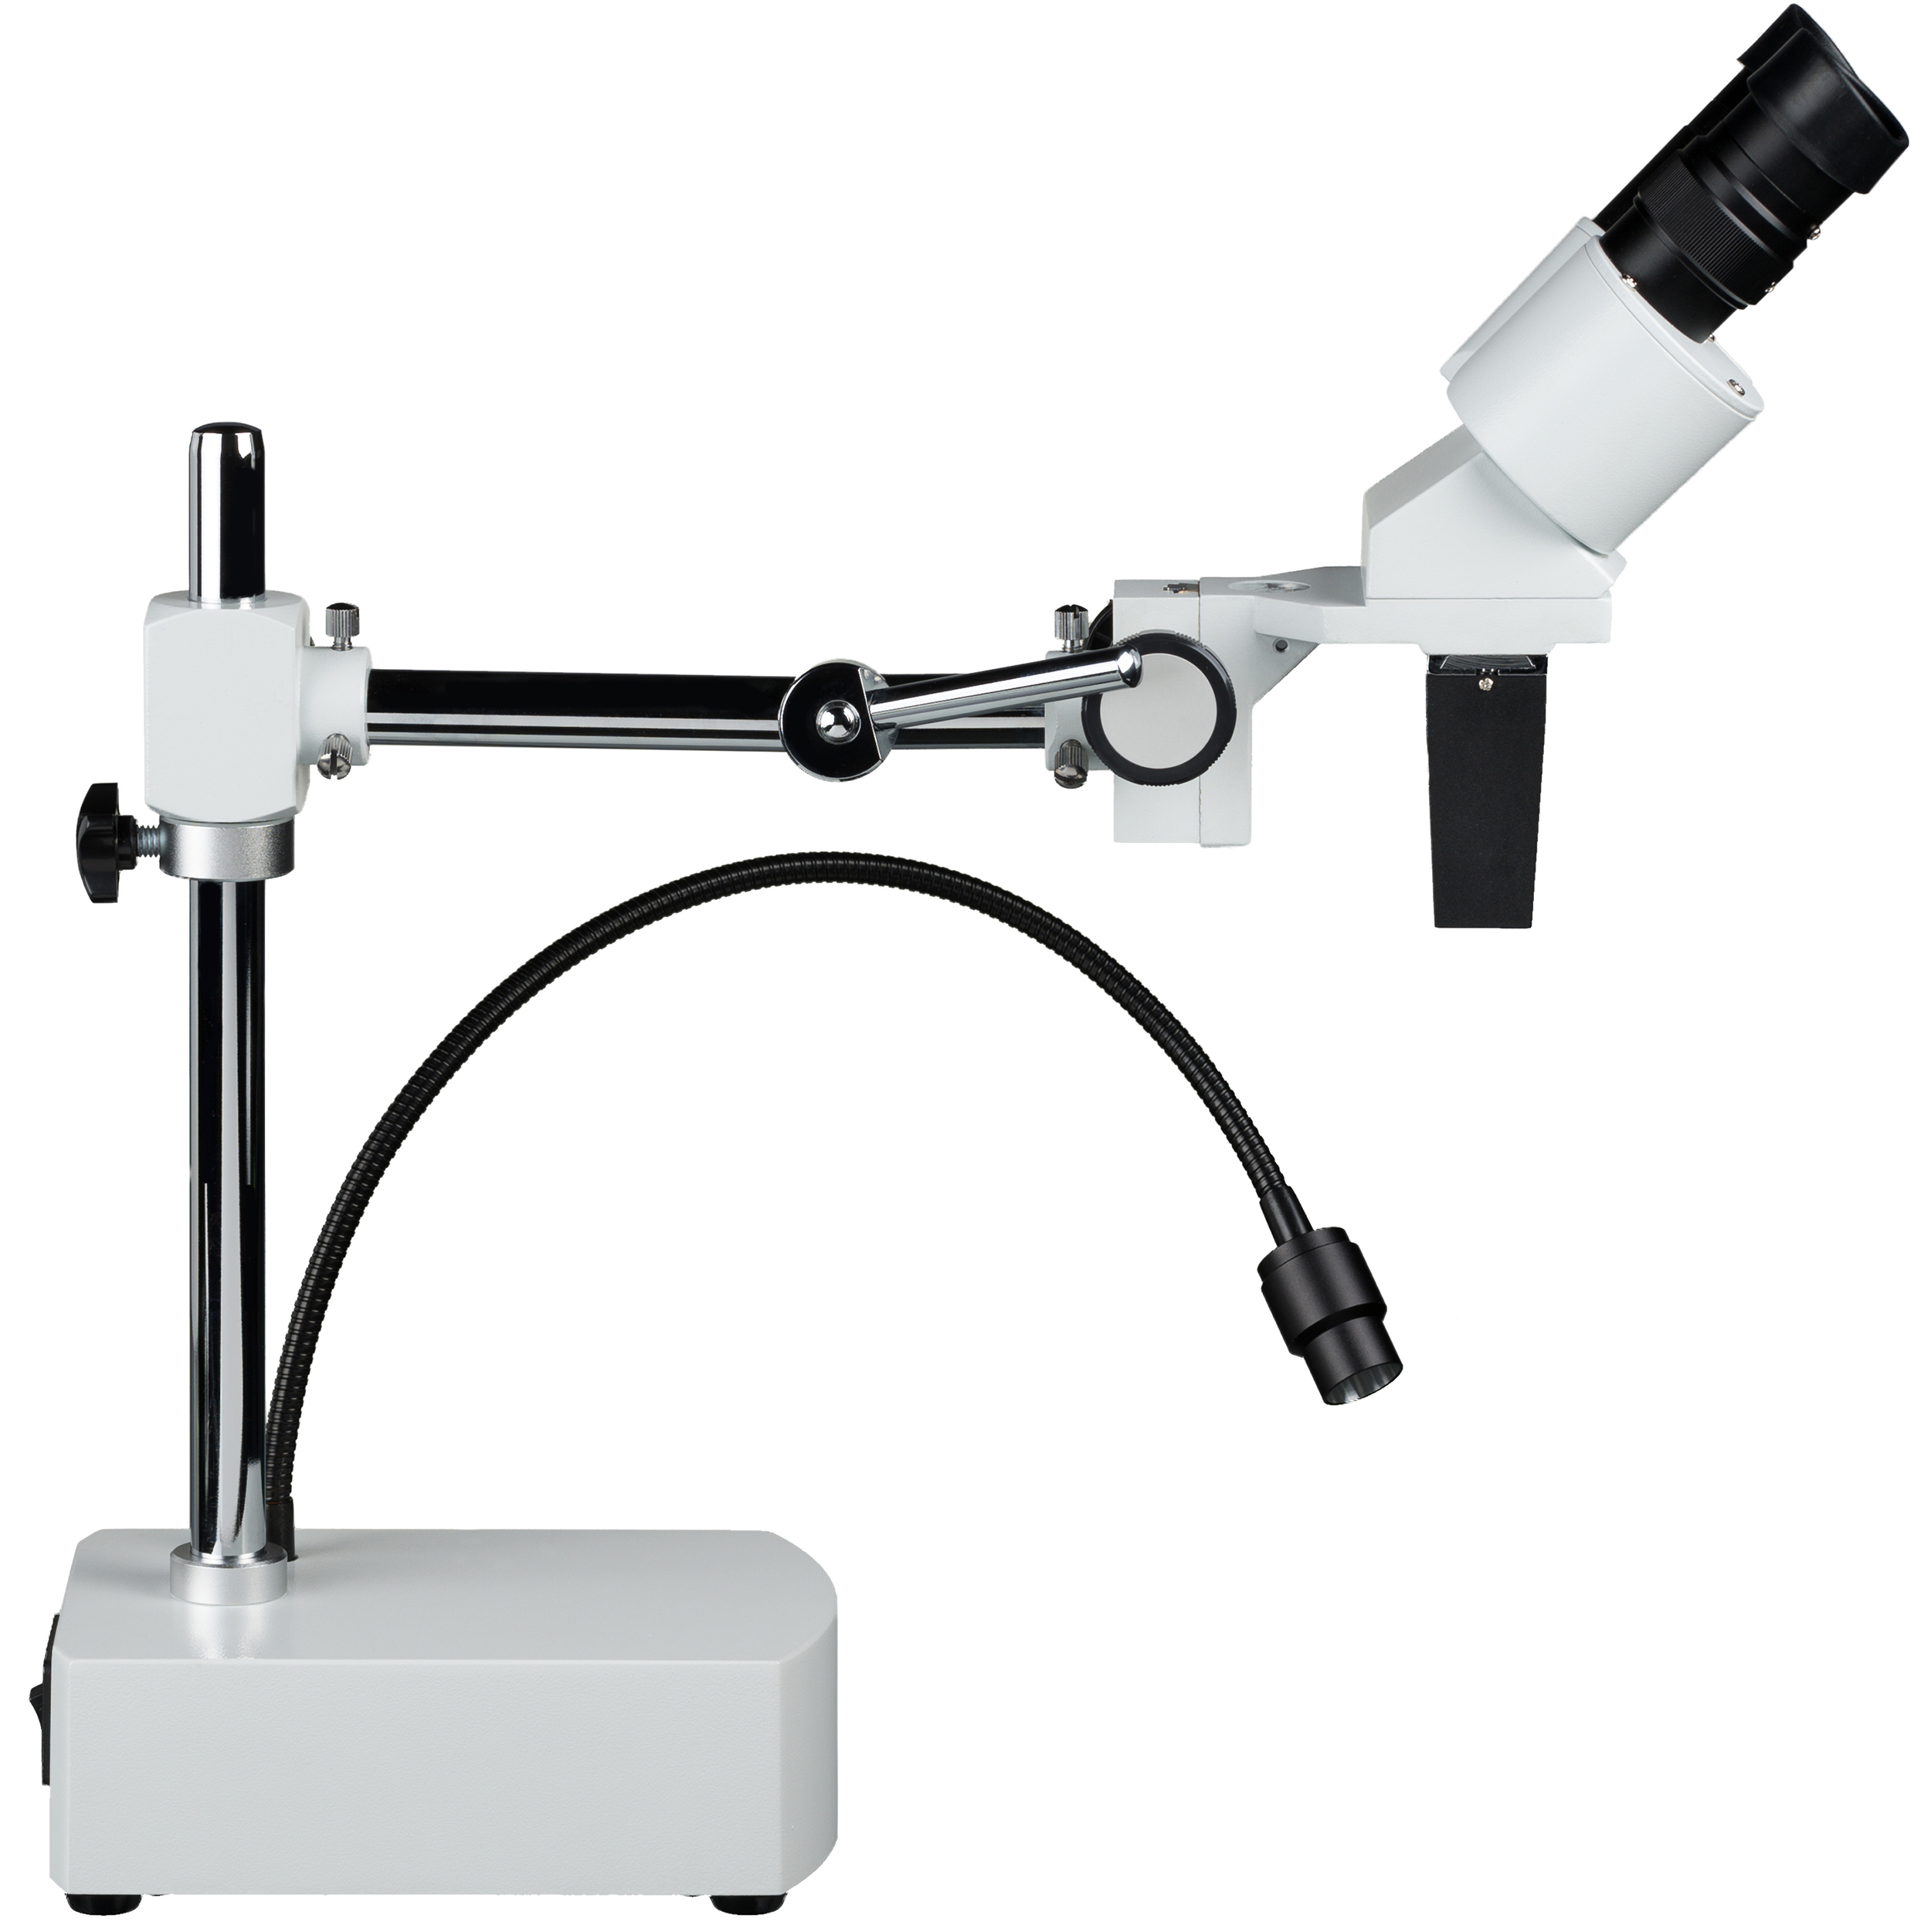 BRESSER Biorit ICD CS 5x-20x Stereo Microscope LED